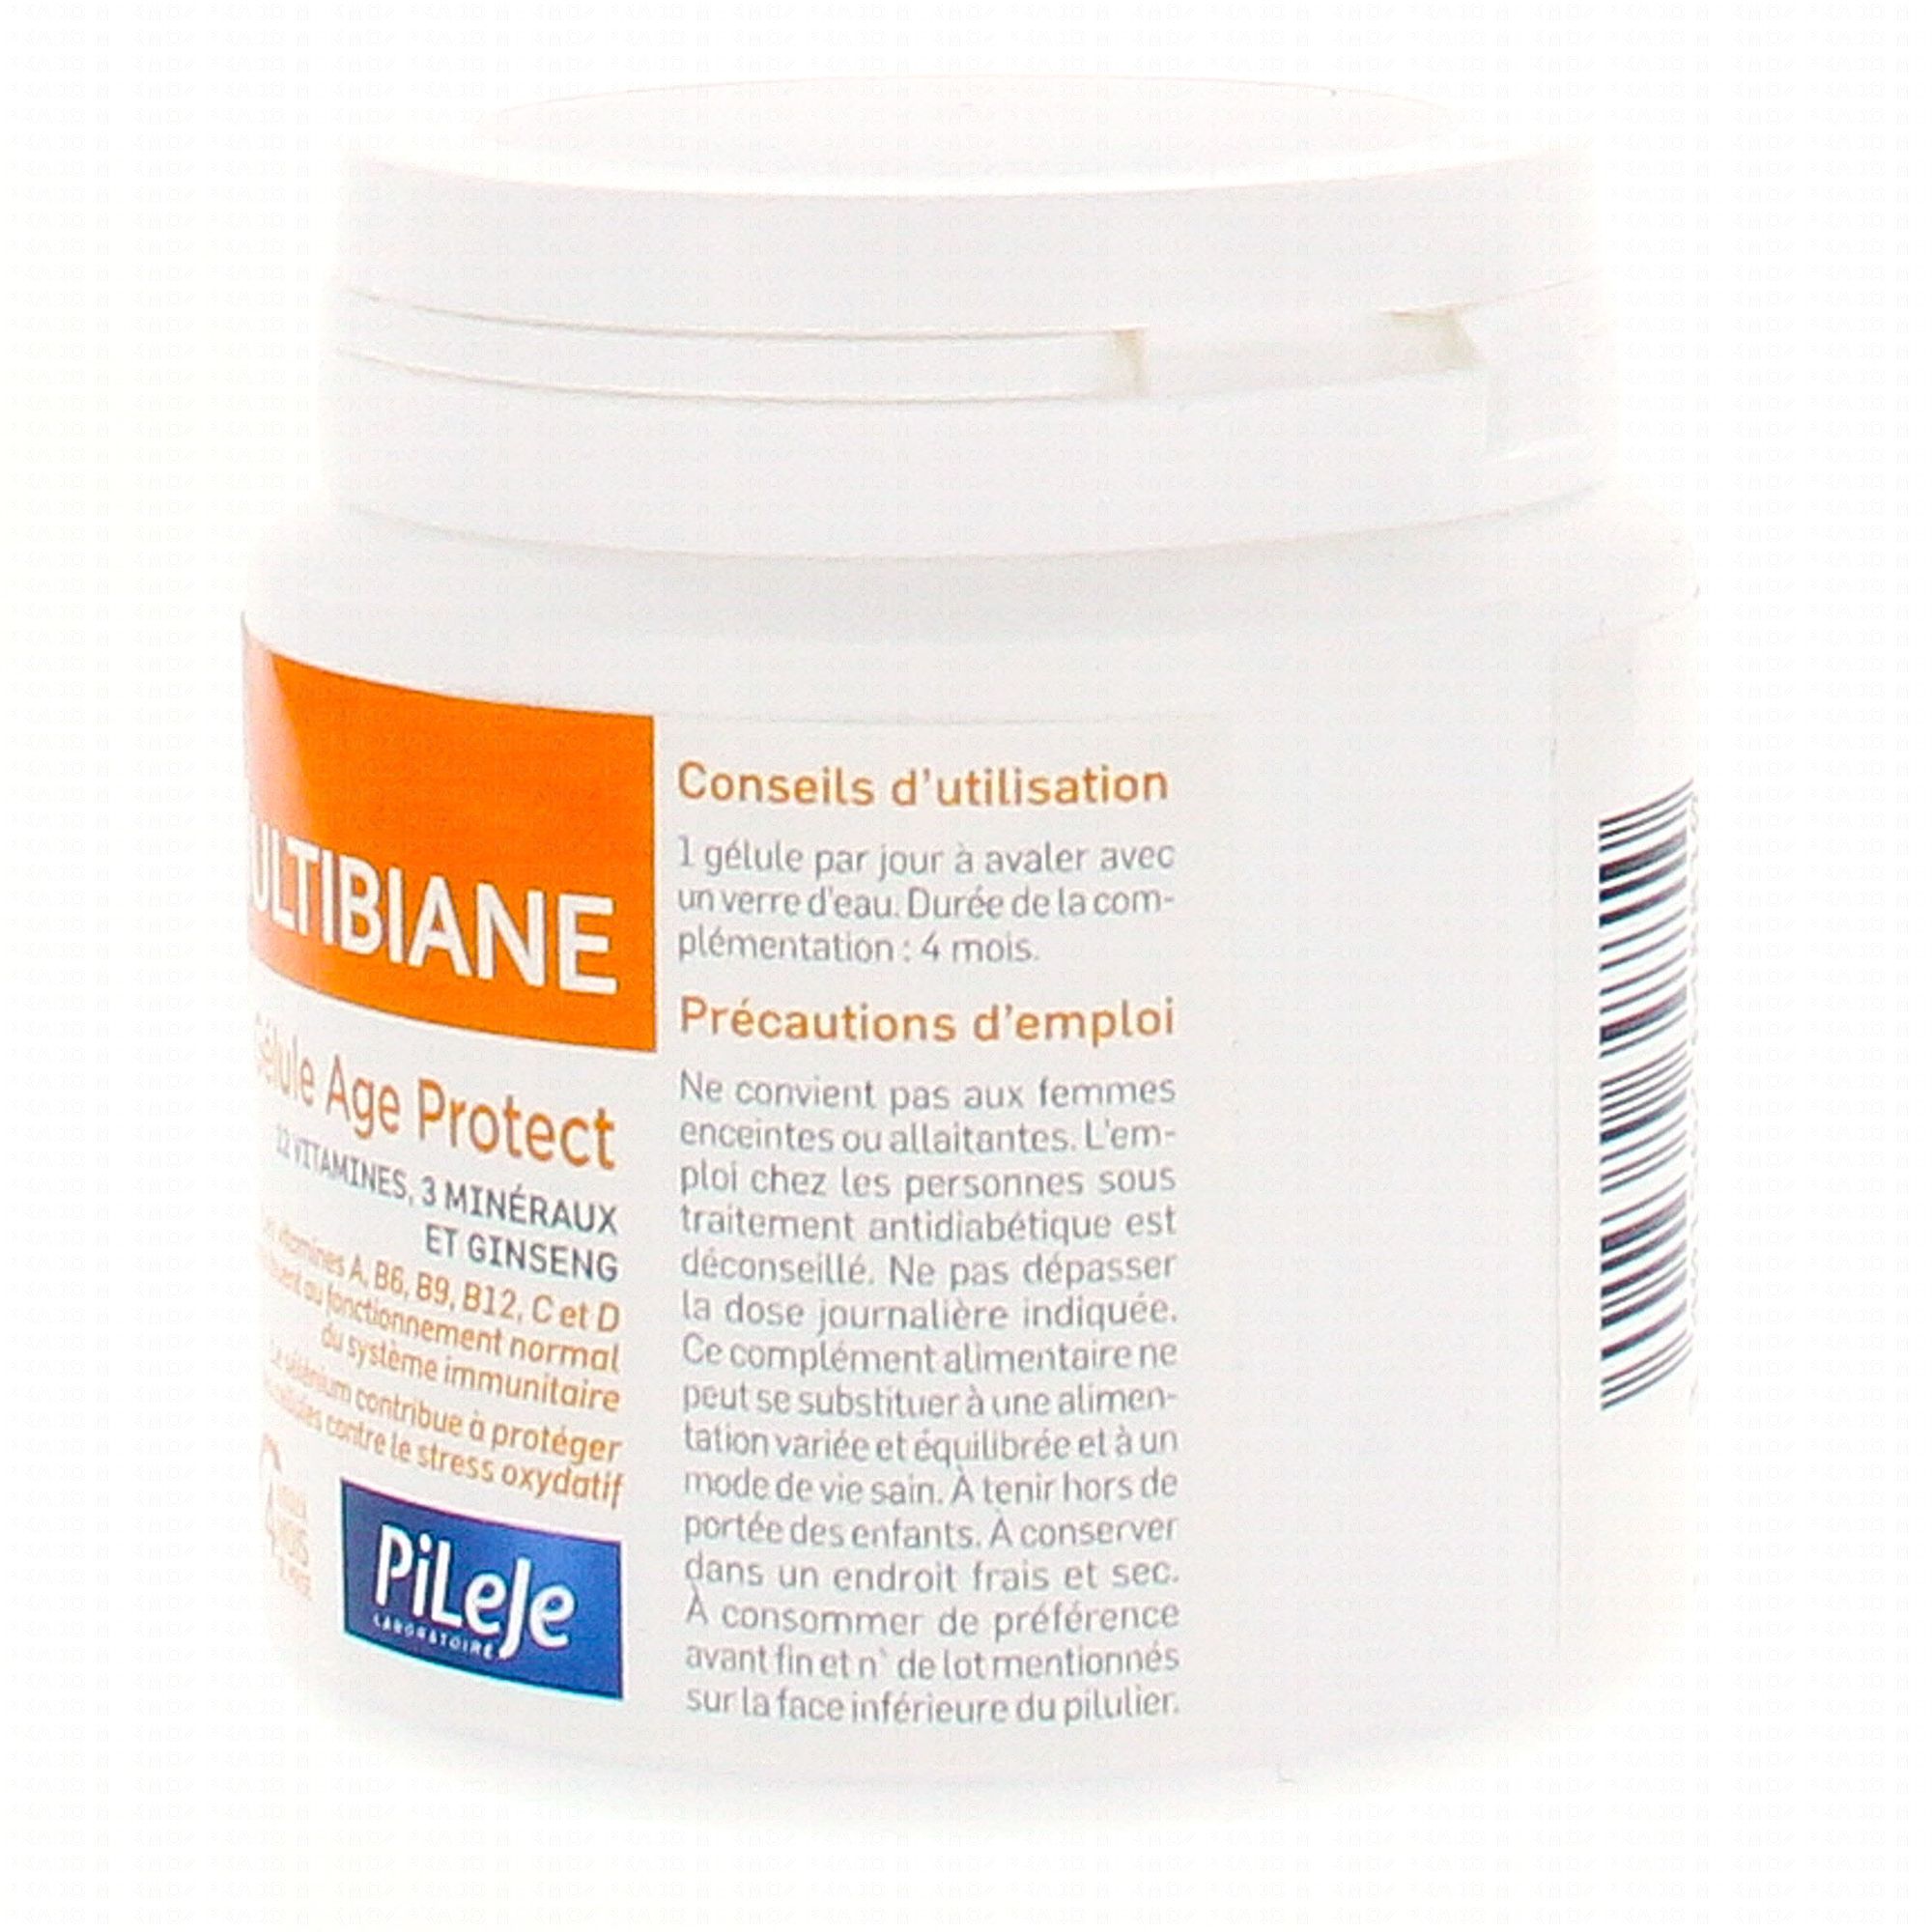 PILEJE Multibiane age protect pot 120 gélules - Pharmacie Prado Mermoz